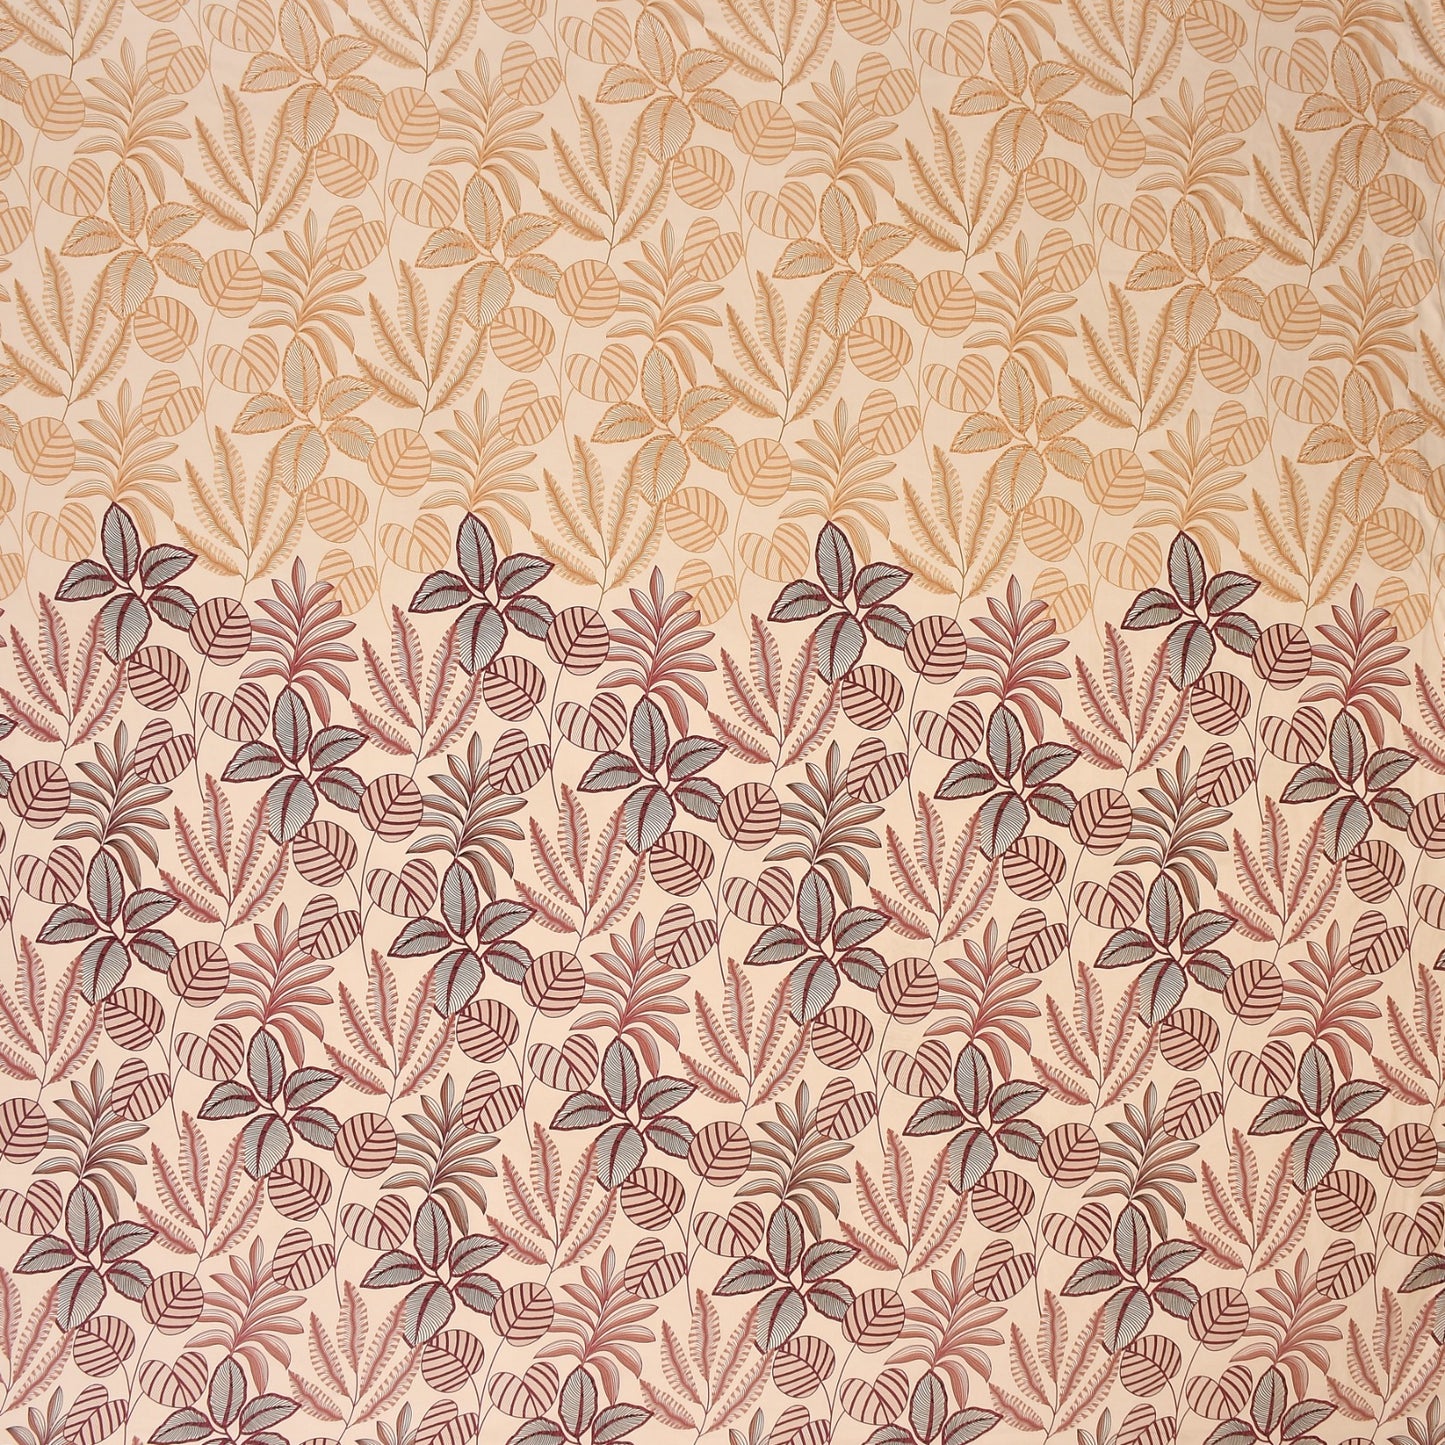 Mix and Match Brown Beige Floral Line Art King Size Bedsheet Set